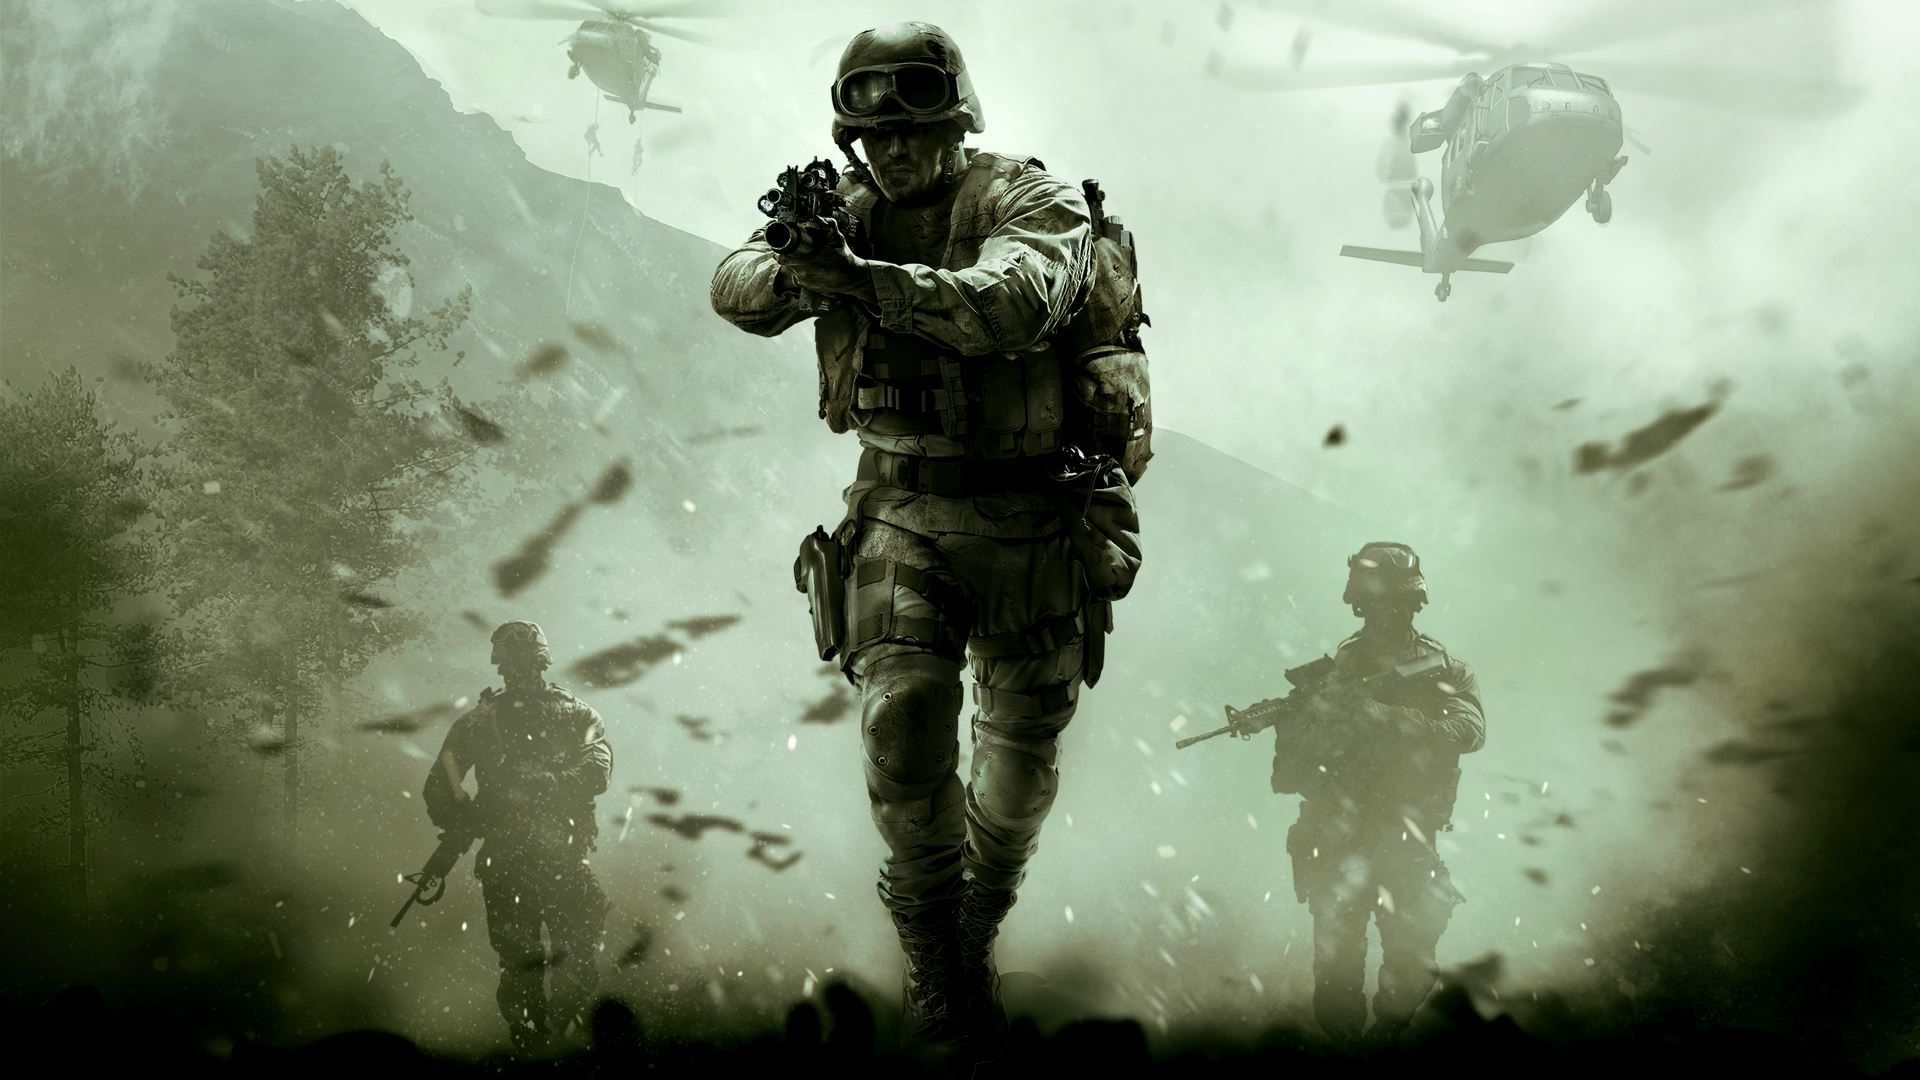 Call Of Duty: Infinite Warfare Wallpaper For Windows. Call of duty infinite, Modern warfare, Call of duty